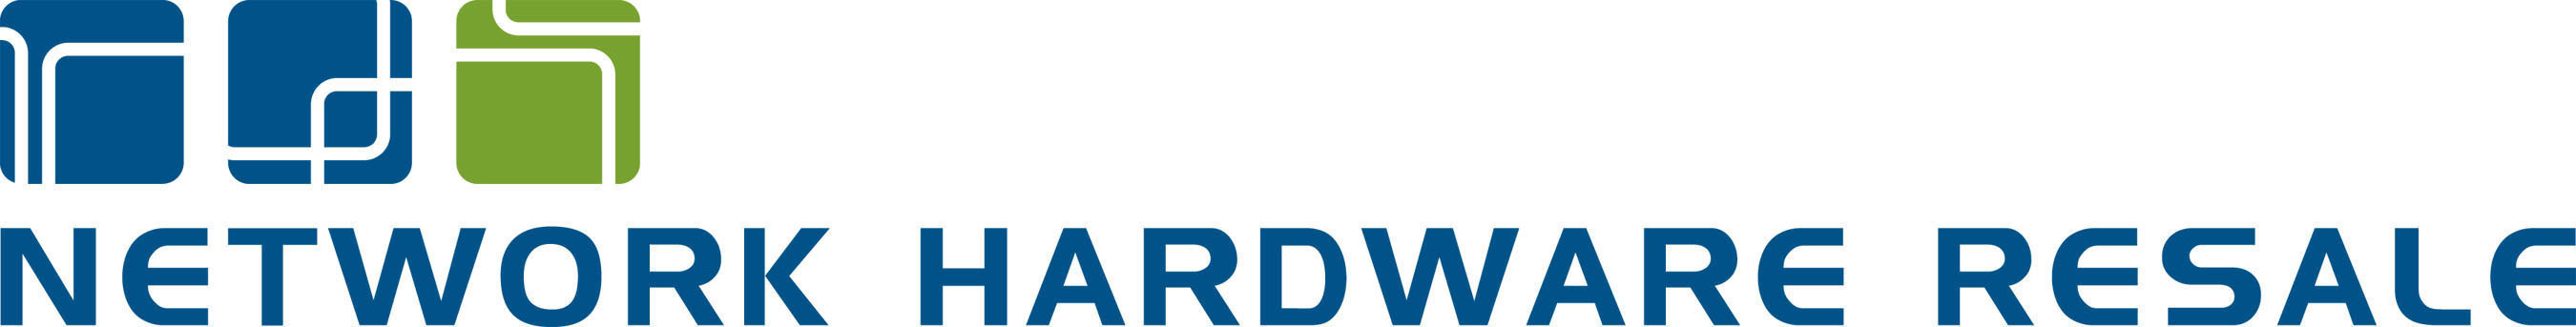 Network Hardware Resale Logo. (PRNewsFoto/Network Hardware Resale) (PRNewsFoto/NETWORK HARDWARE RESALE)